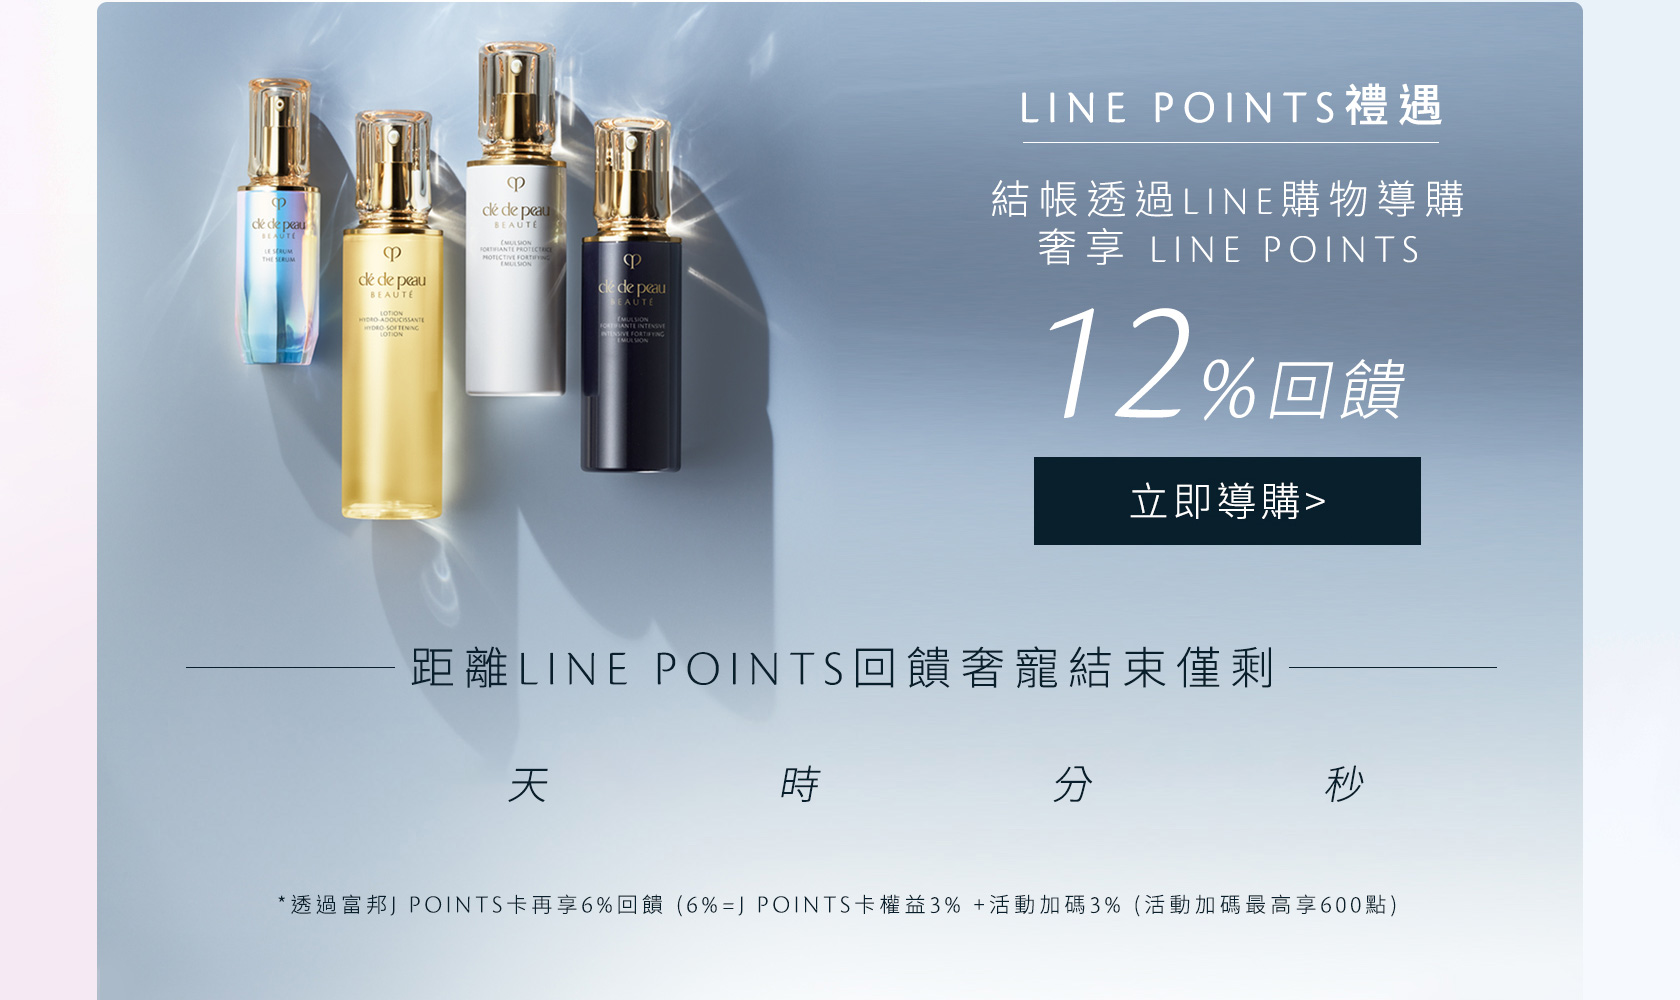 8/14-8/18 結帳奢享LINE POINTS 12%回饋